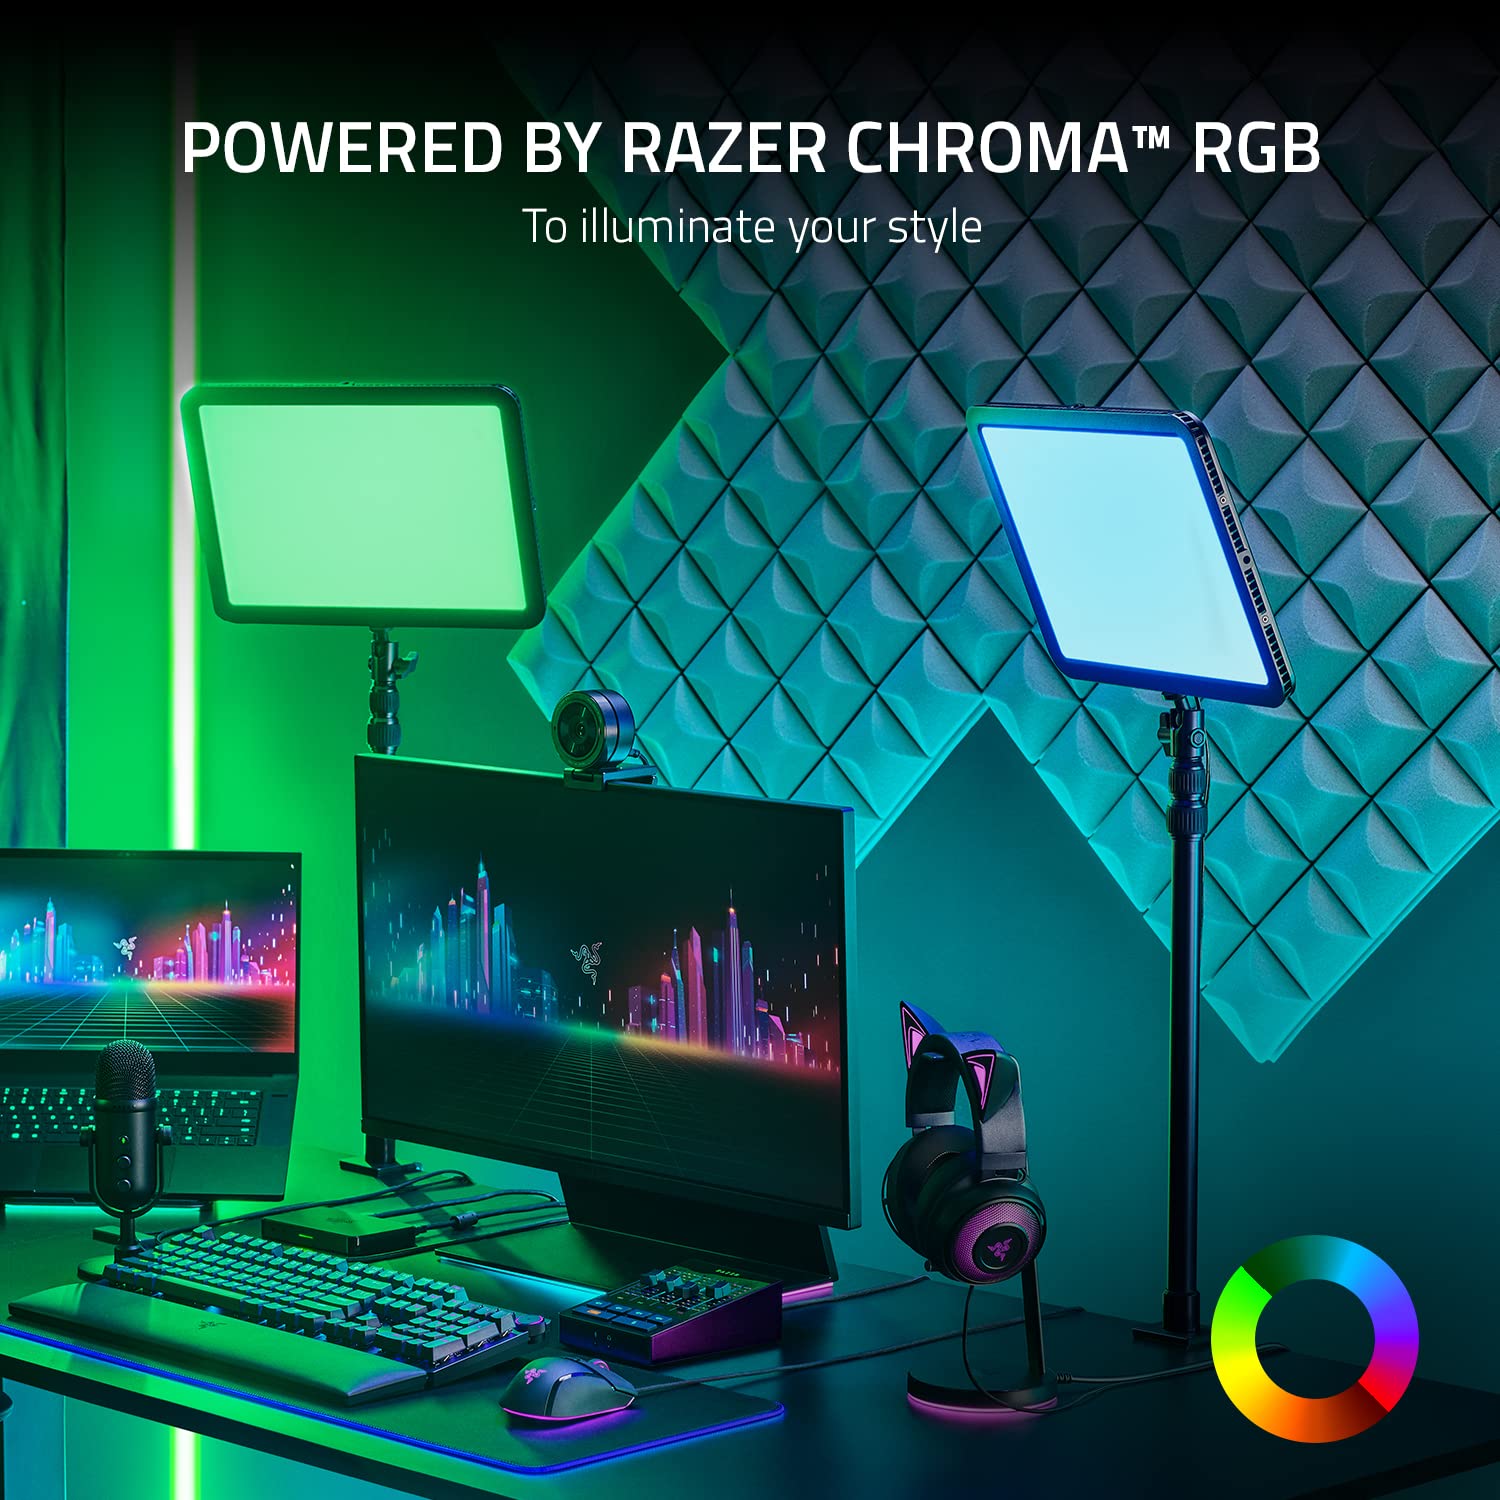 Razer Key Light Chroma: Customizable RGB Light Spectrum - 2800 Lumens Professional Light for Streaming, Video Recording/Conferencing on PC, Phone - Control via App - Clamp Mount - Wi-Fi & Bluetooth